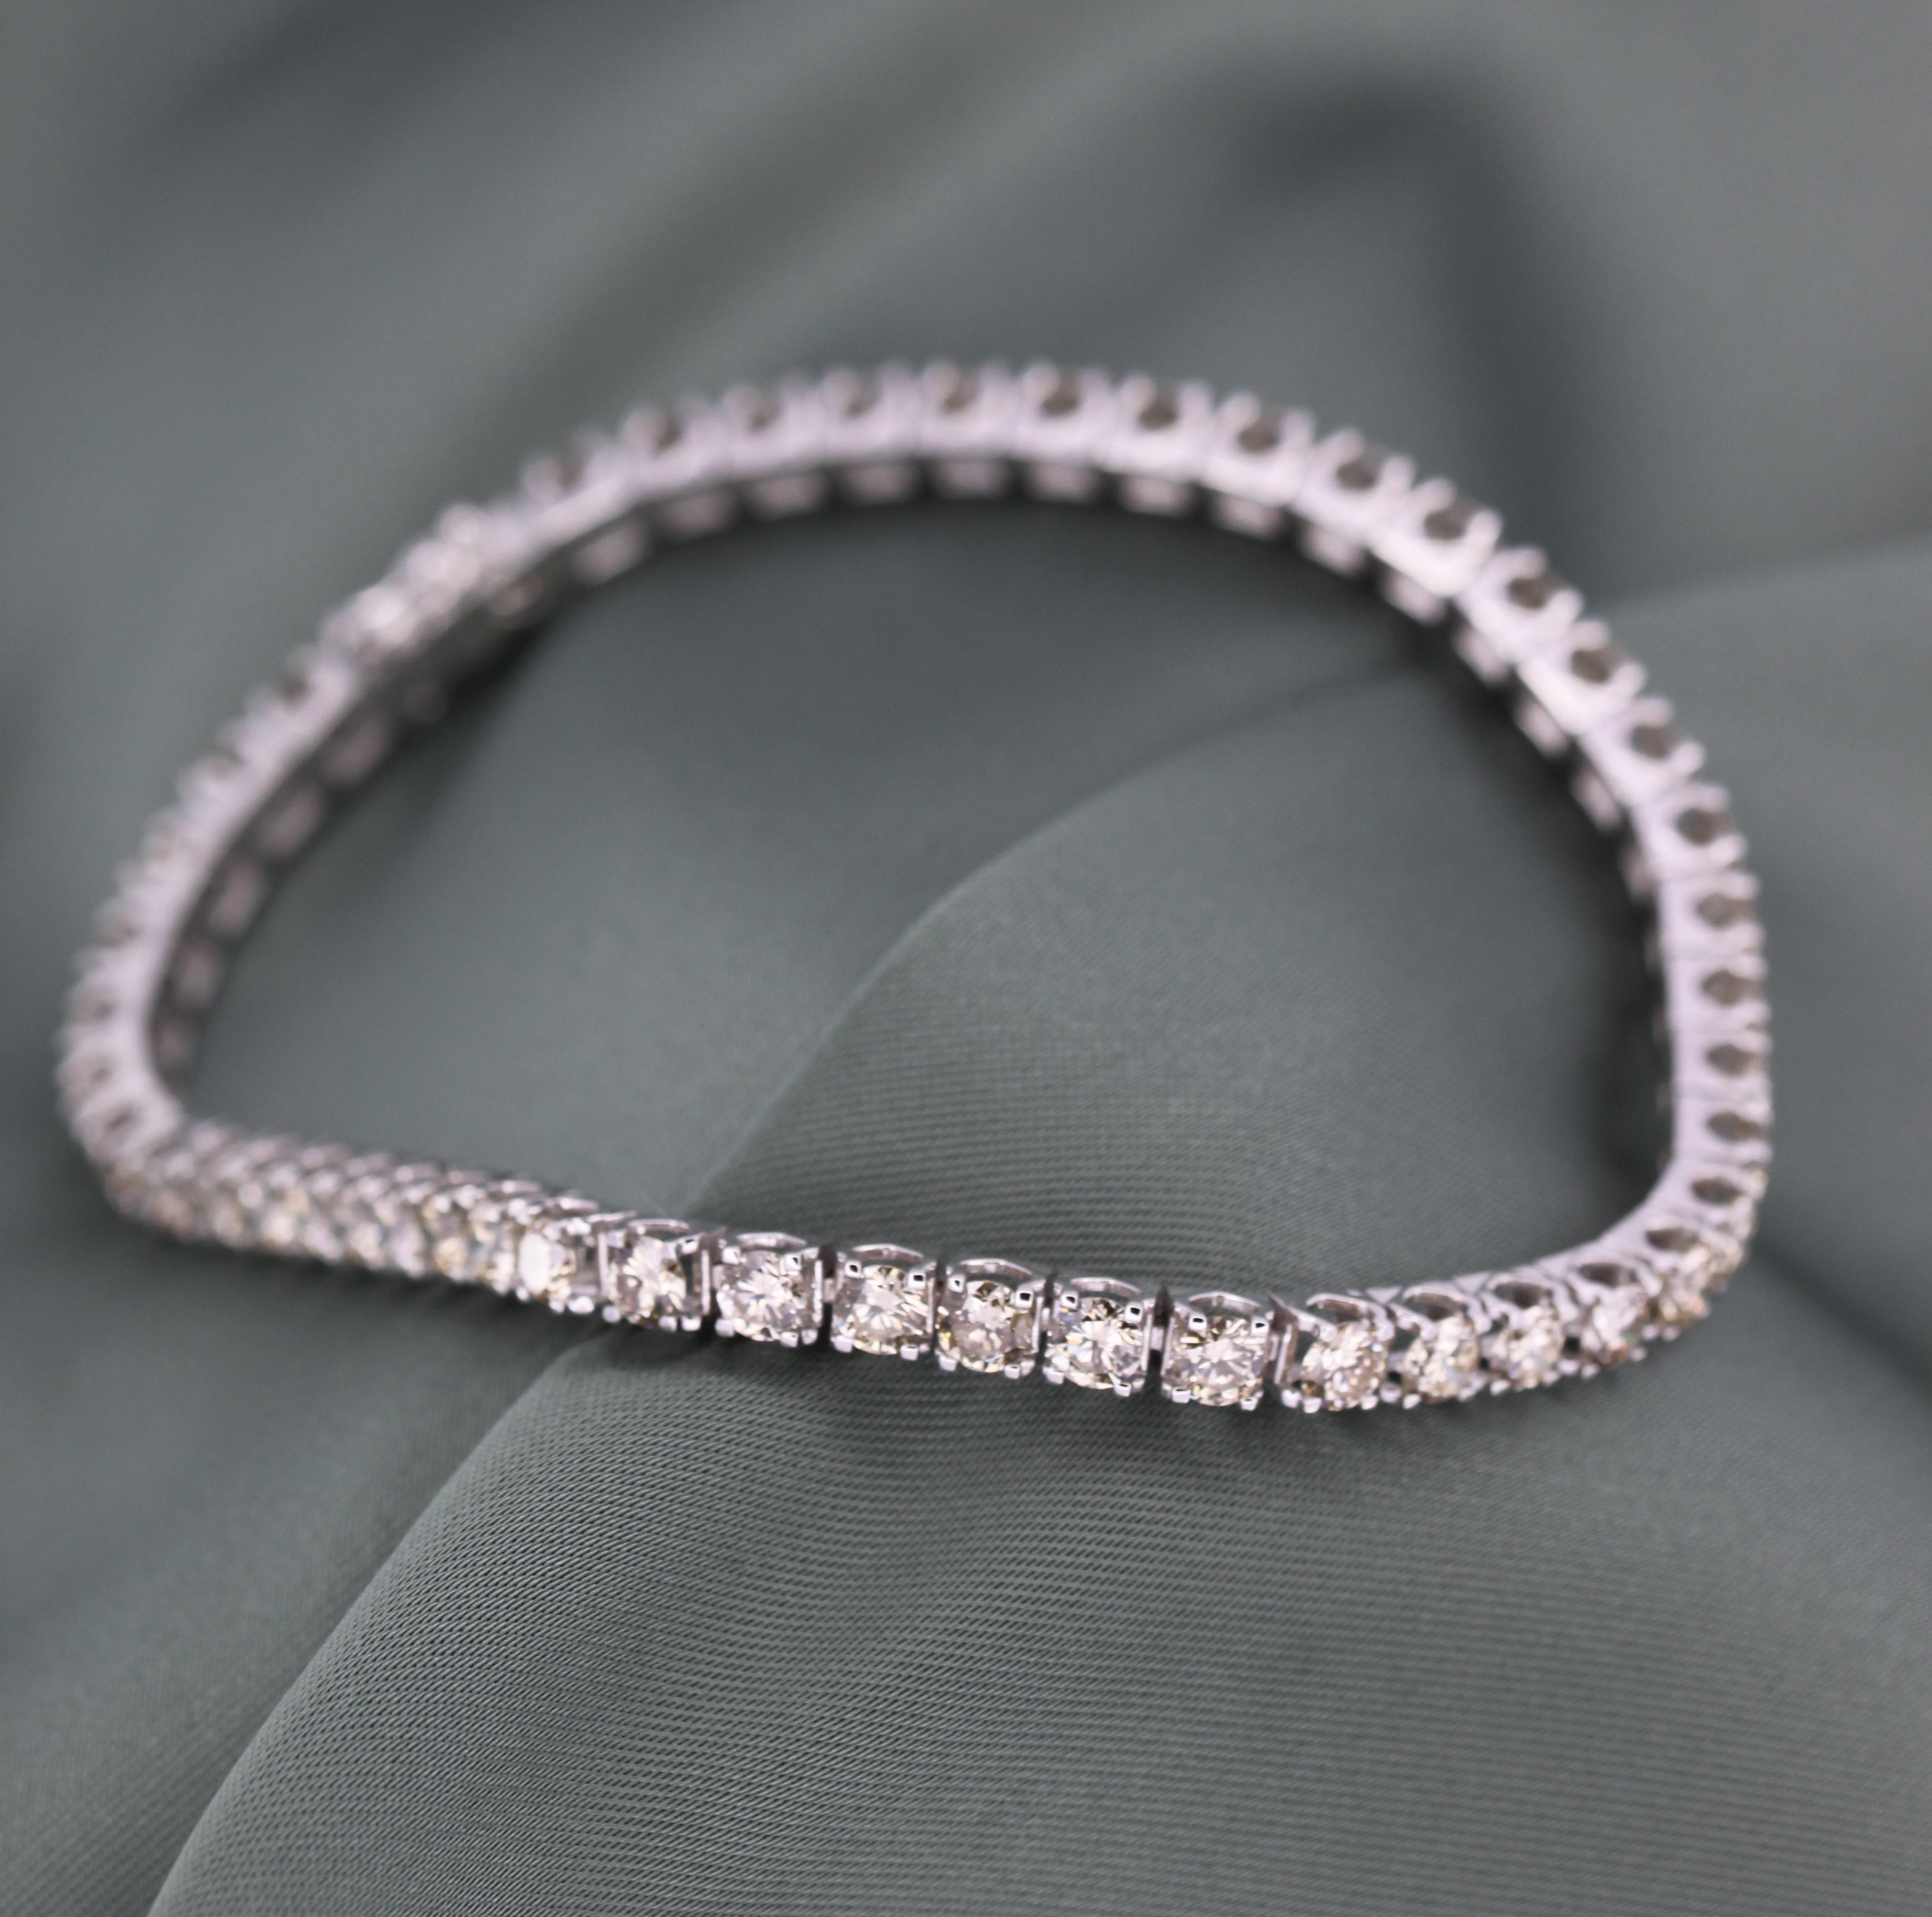 Liali Jewellery - A touch of charm - Emerald Cut Bracelet. لمسة من السحر  والأناقة - أسورة من قَطع الزمرد! #lialijewellery #DSF #dsfoffer  #diamondjewellery #necklace #ring #diamond #highjewellery #glamour #jewelry  #dubai #postoftheday #